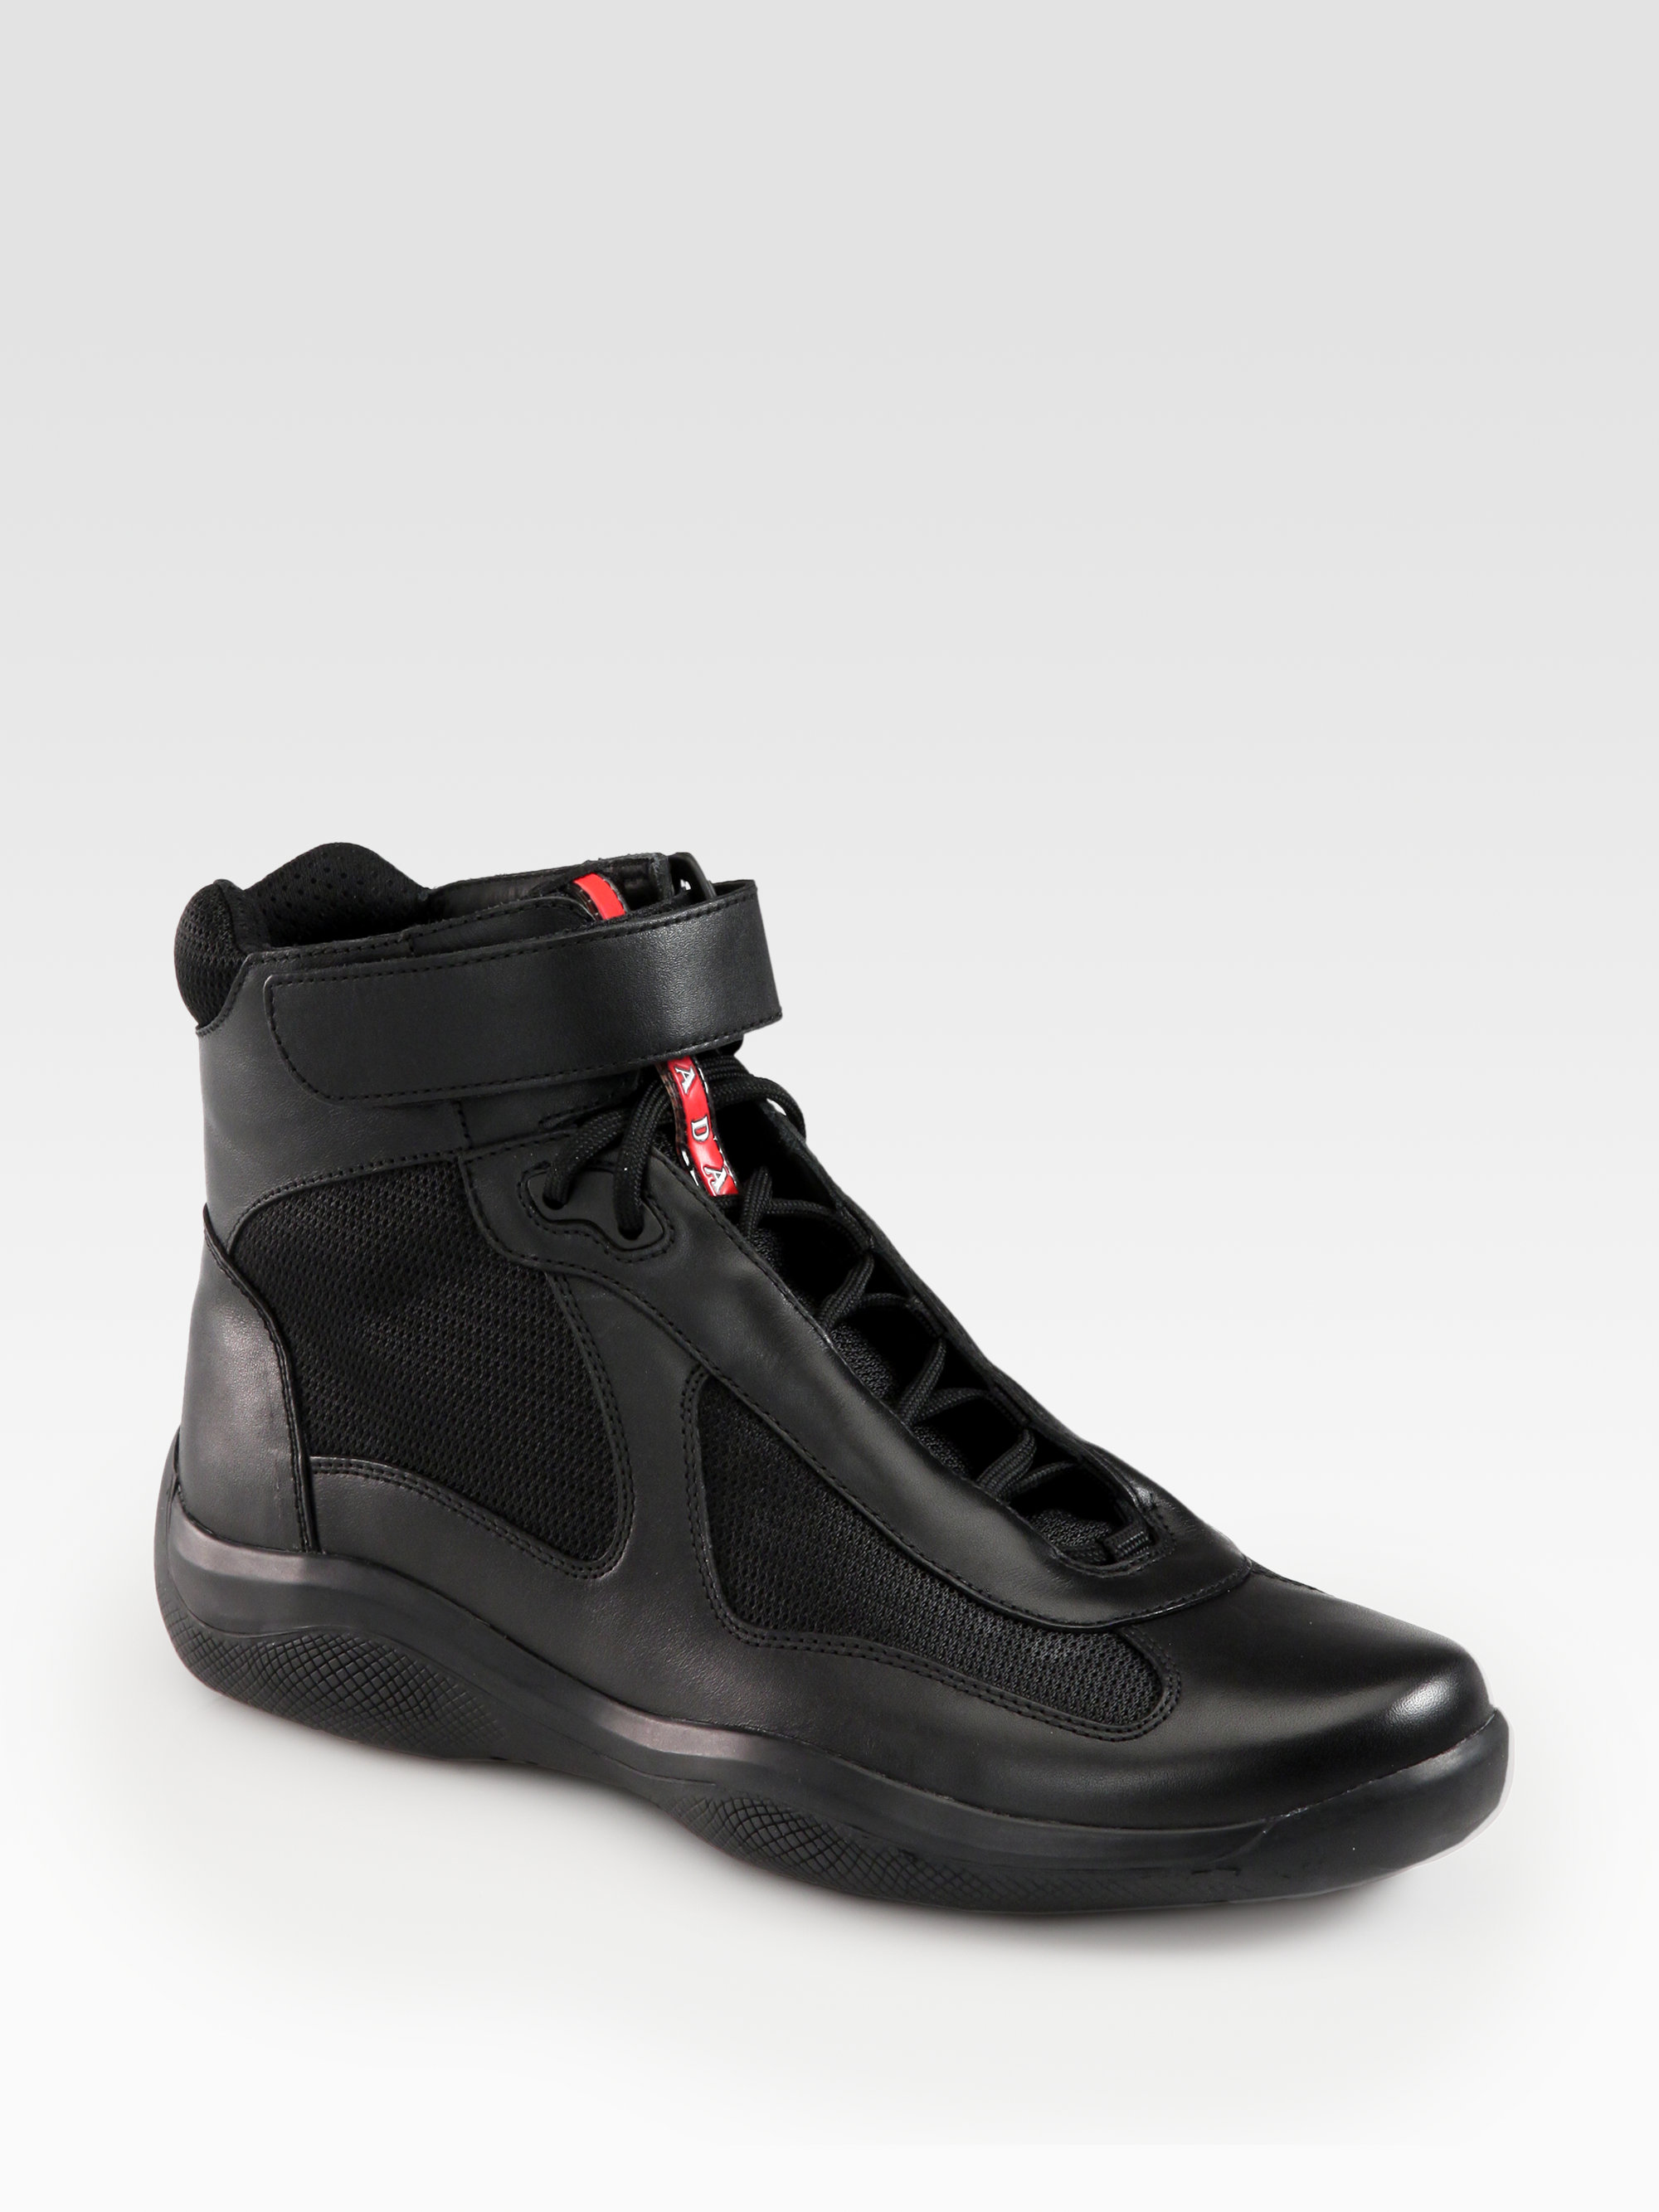 Prada High-top Leather Sneakers in Black for Men | Lyst